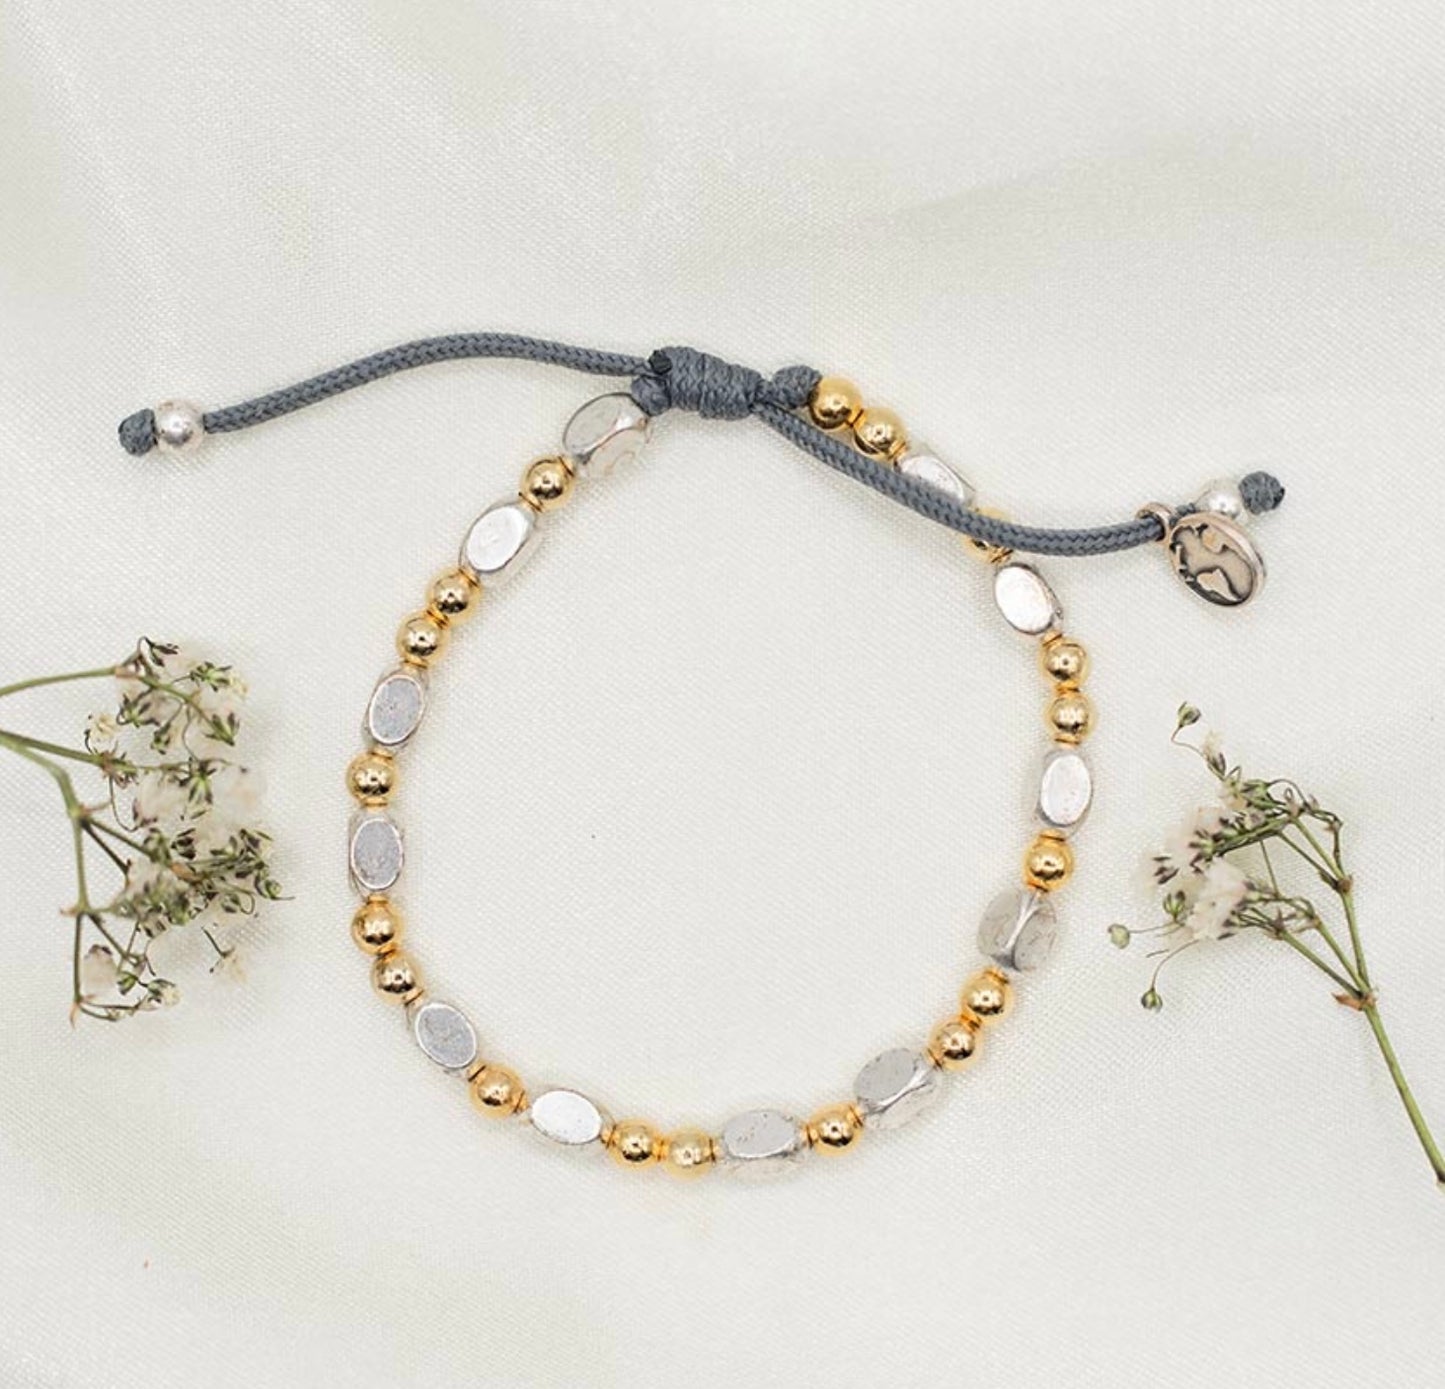 Kind Morse Code Bracelet - Mix Shape Beads